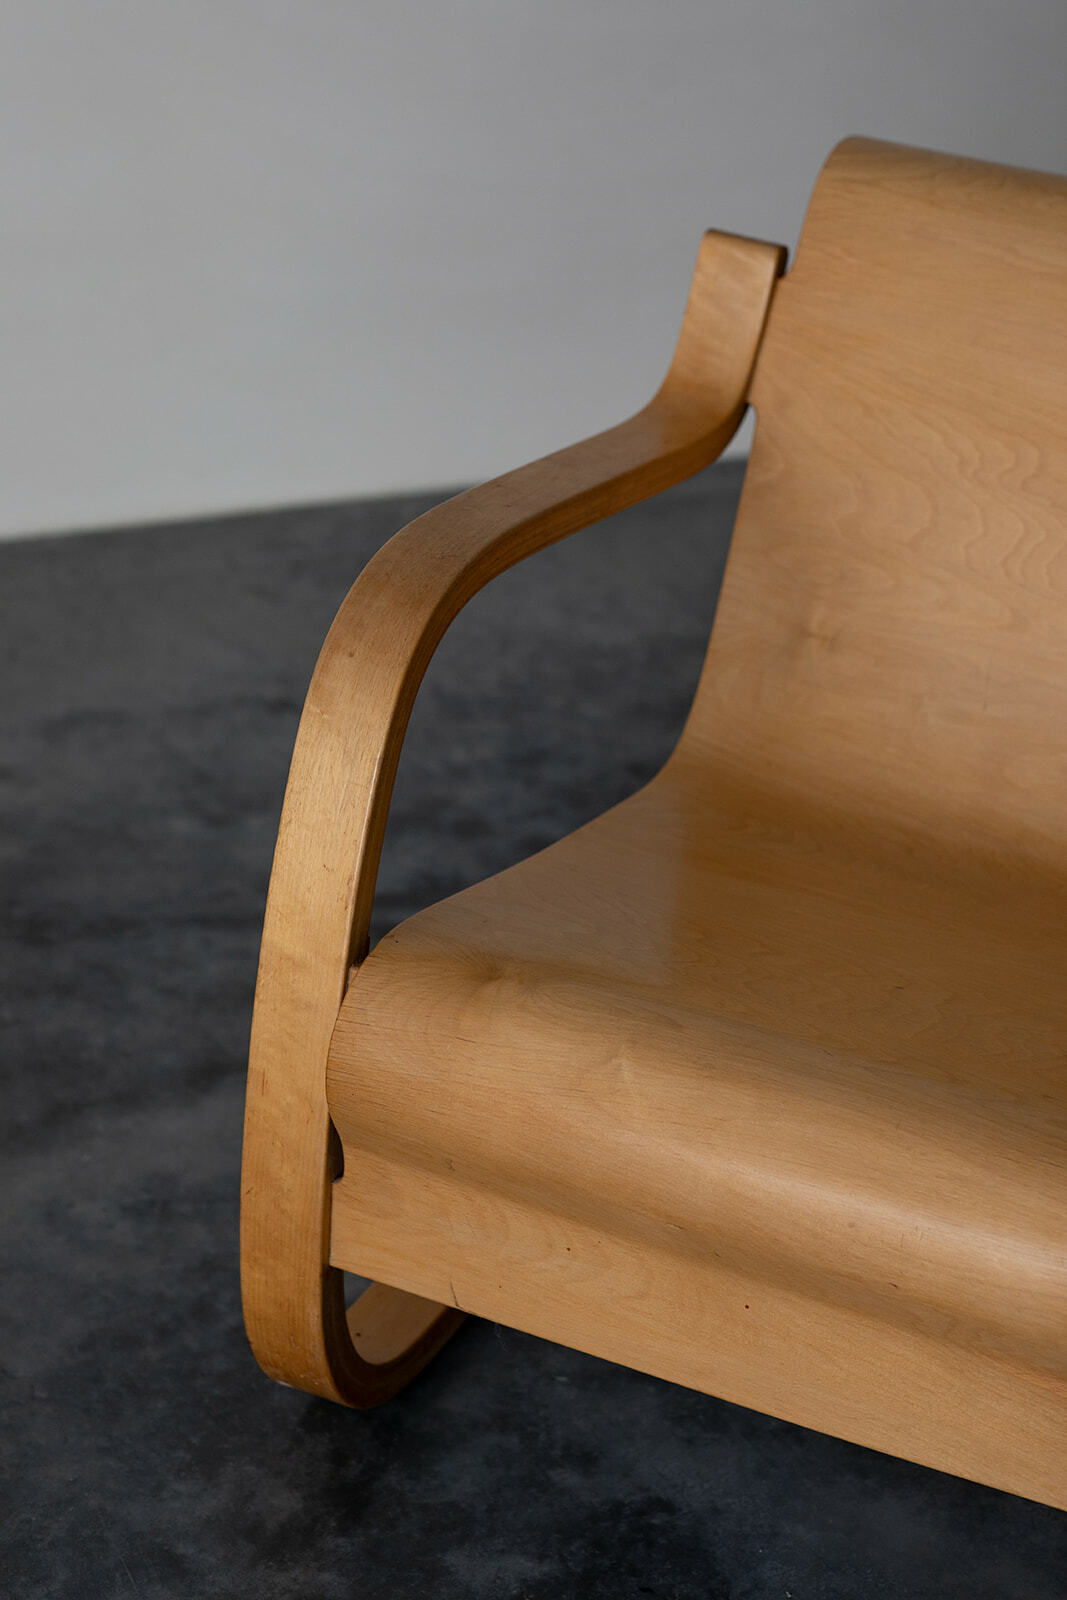 Aalto chair